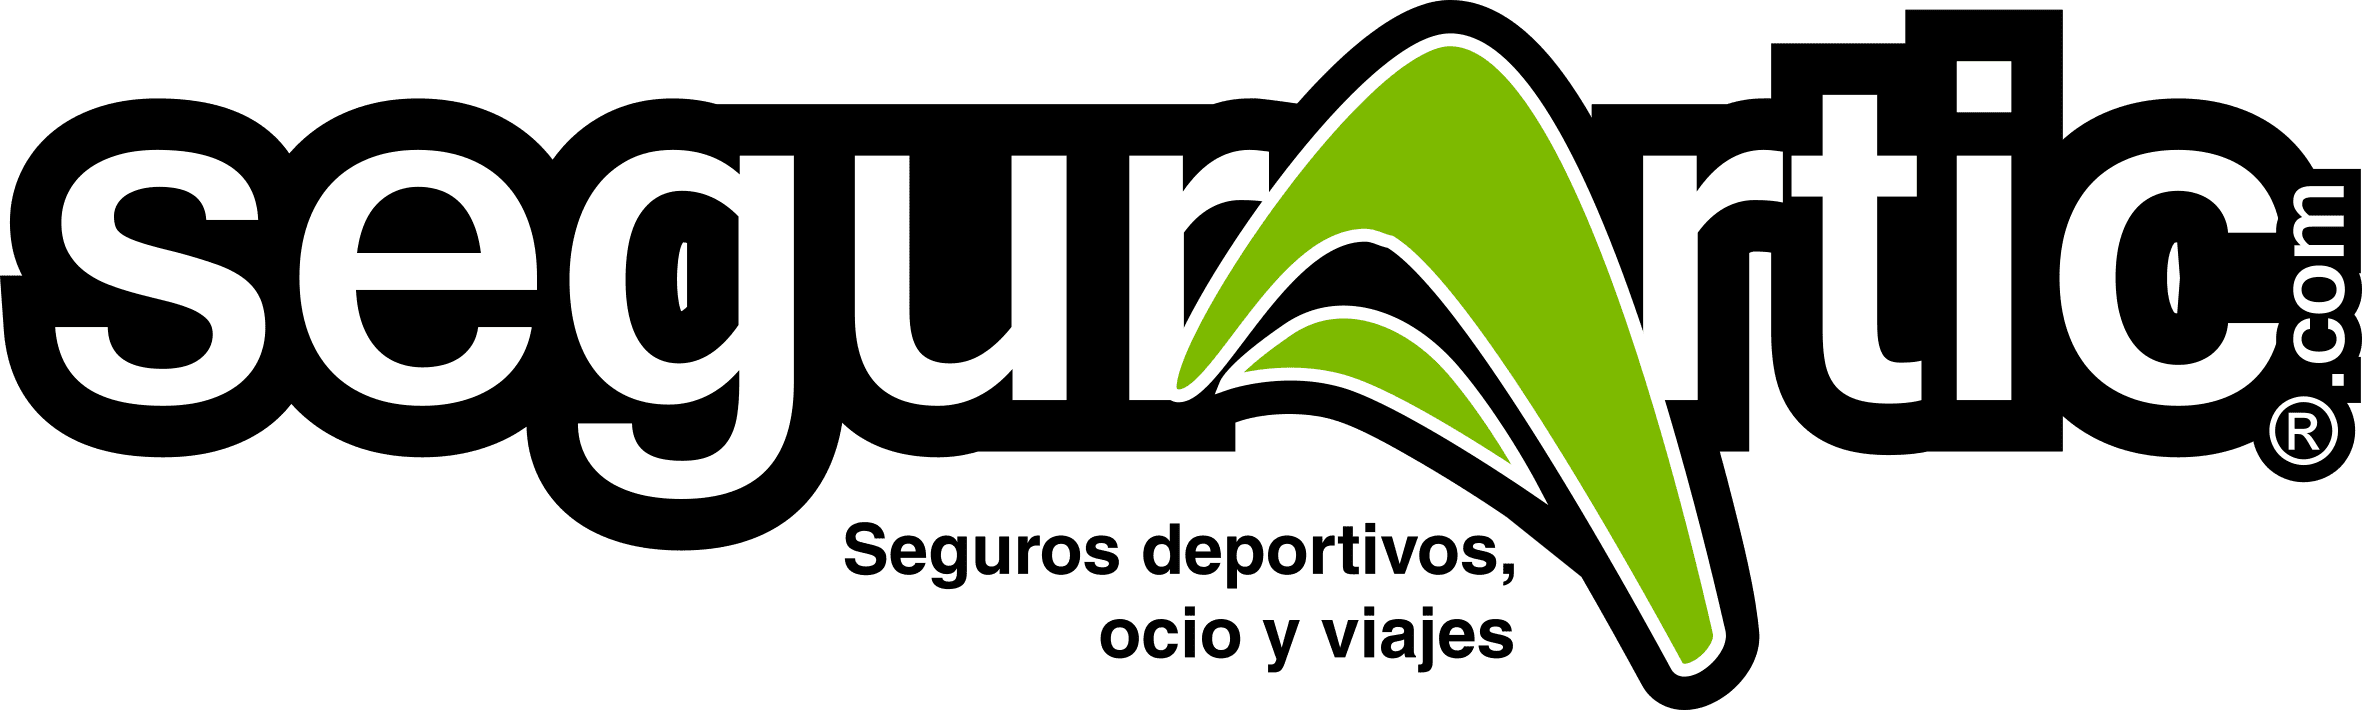 Logo_Segurartic